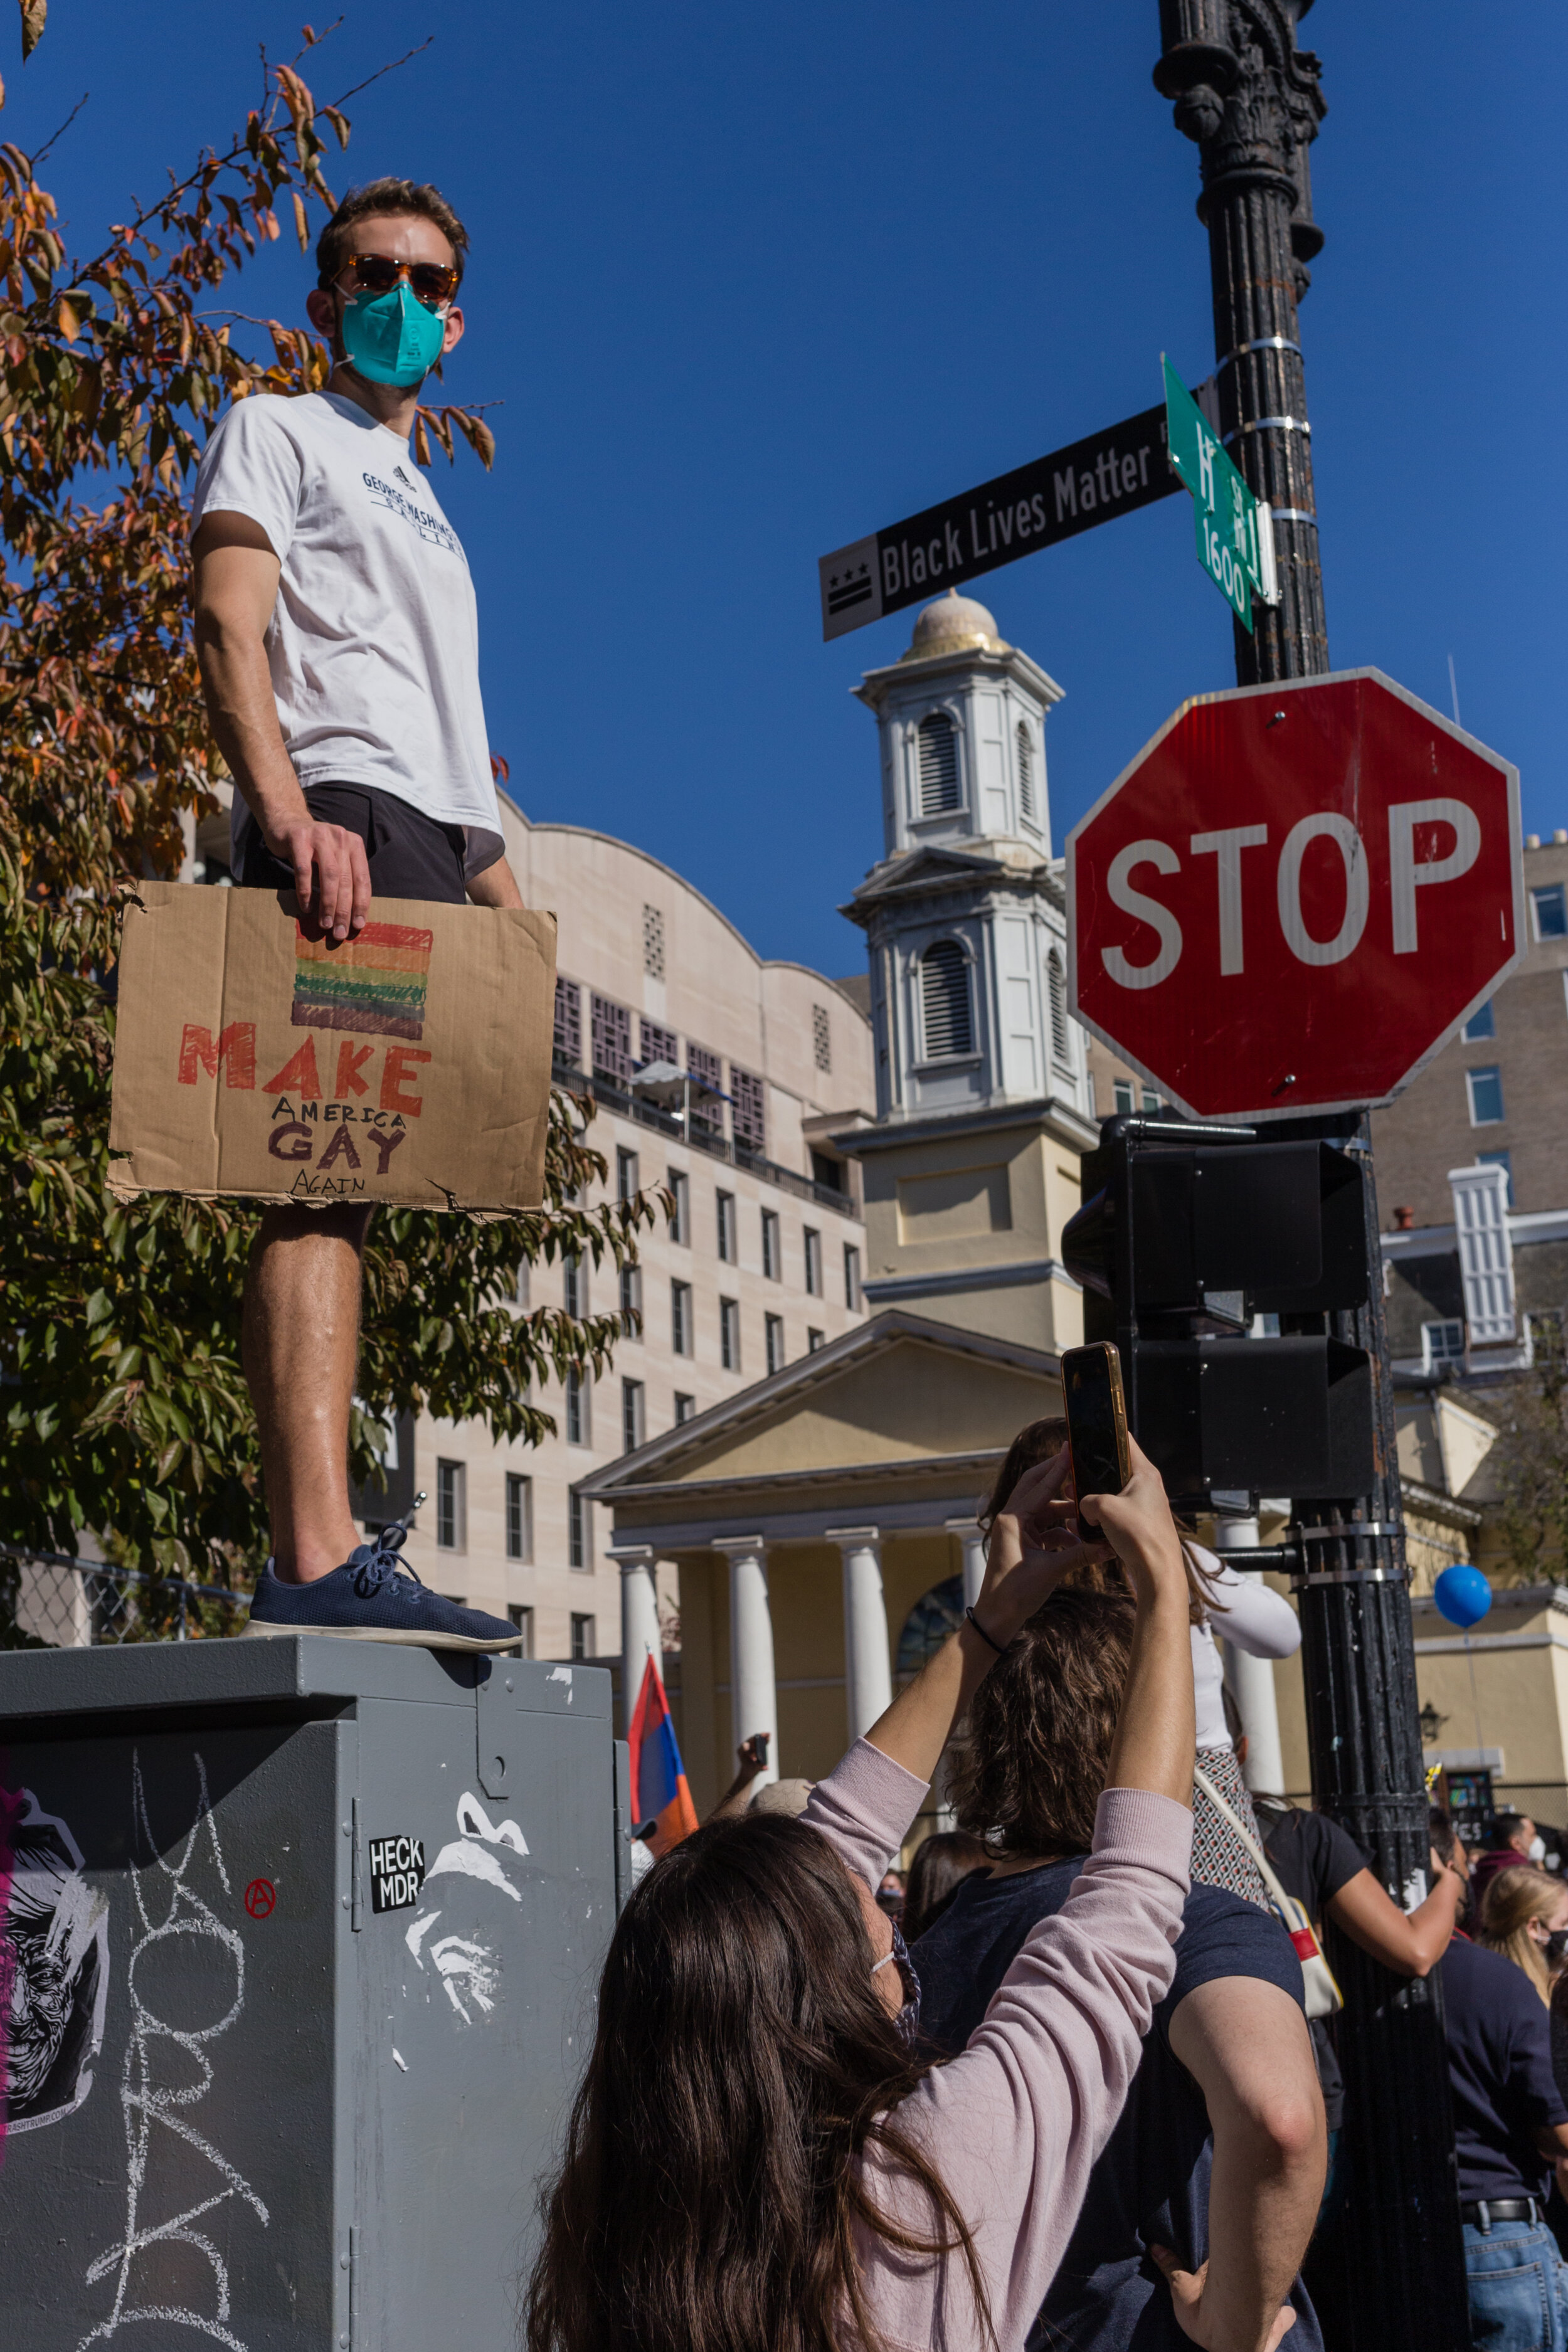 "Gay Again." Washington, D.C. (Nov. 2020)